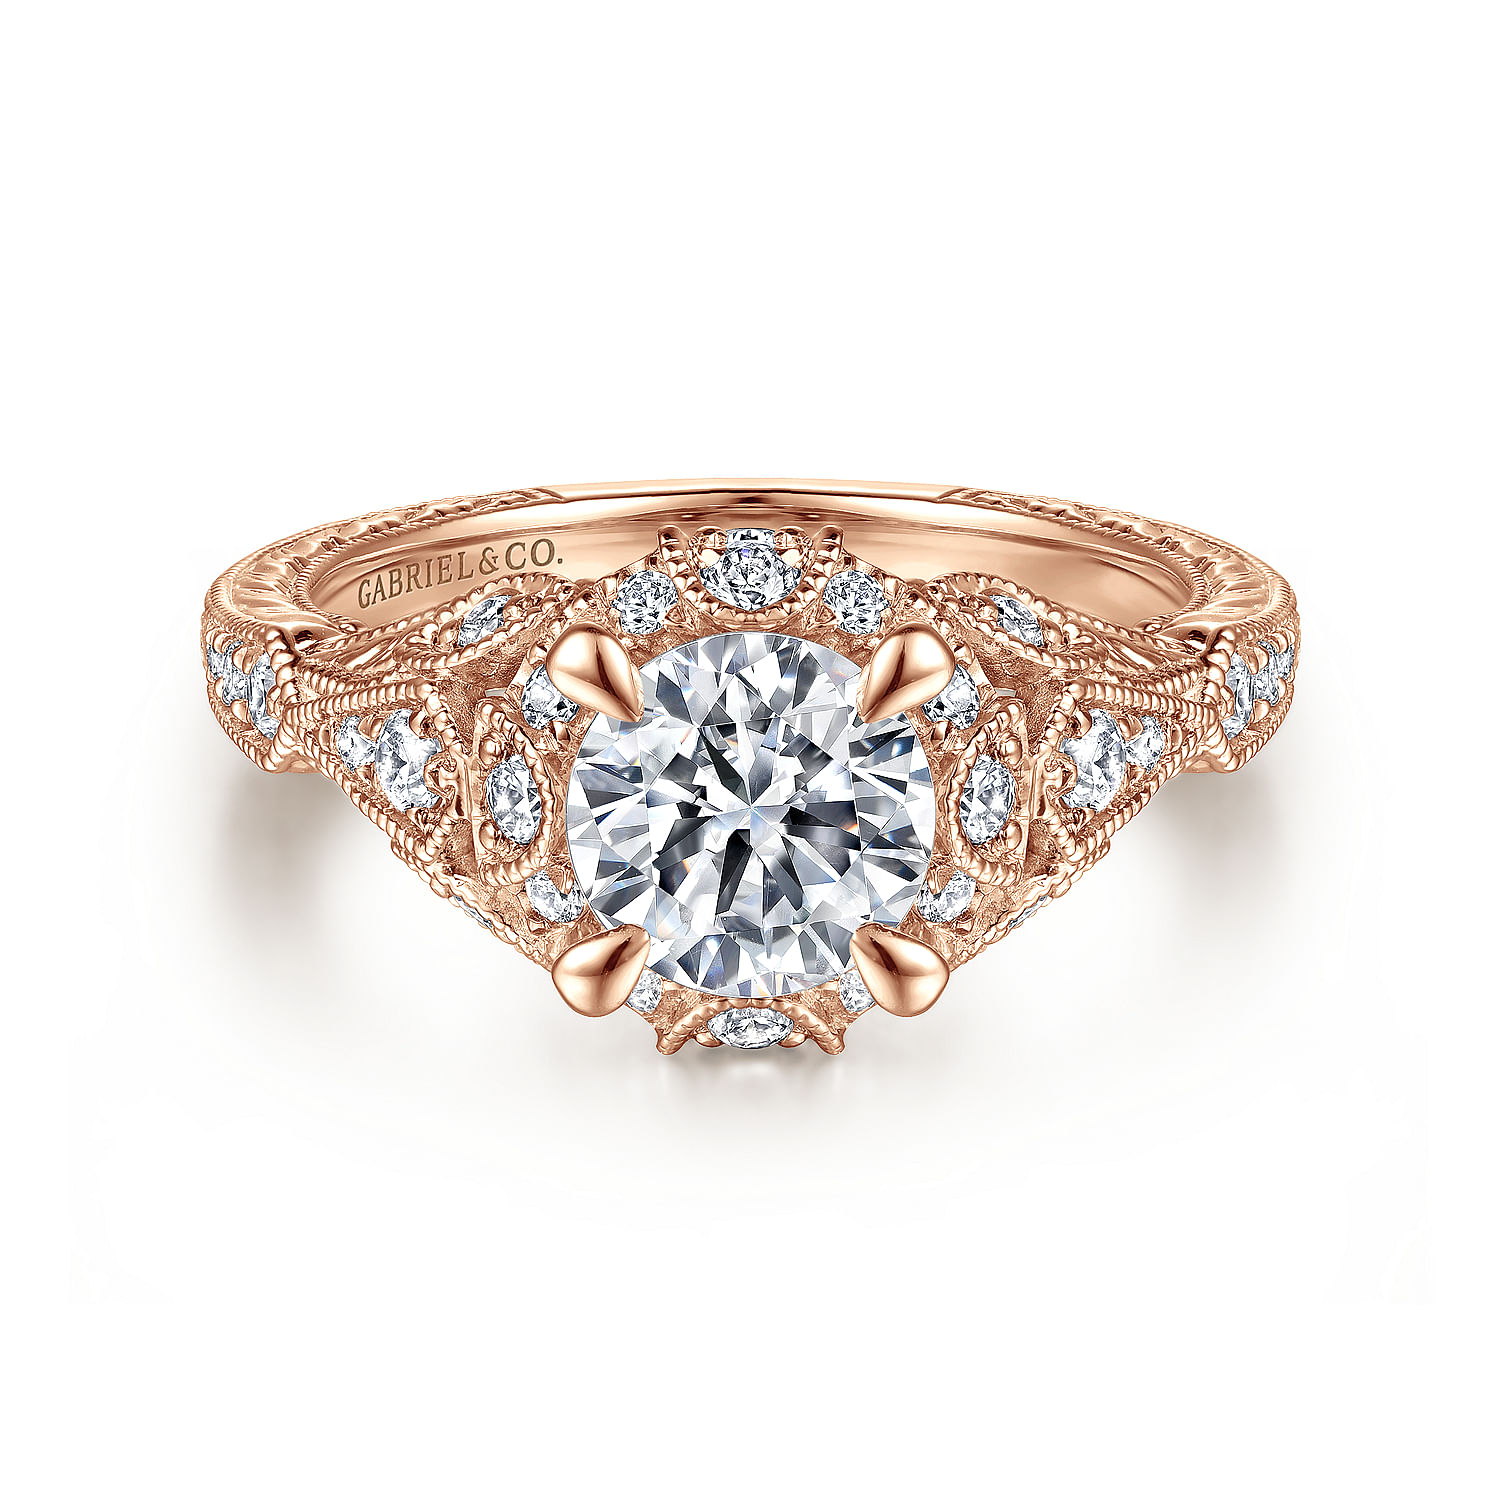 Gabriel - Unique 14K Rose Gold Vintage Inspired Diamond Halo Engagement Ring